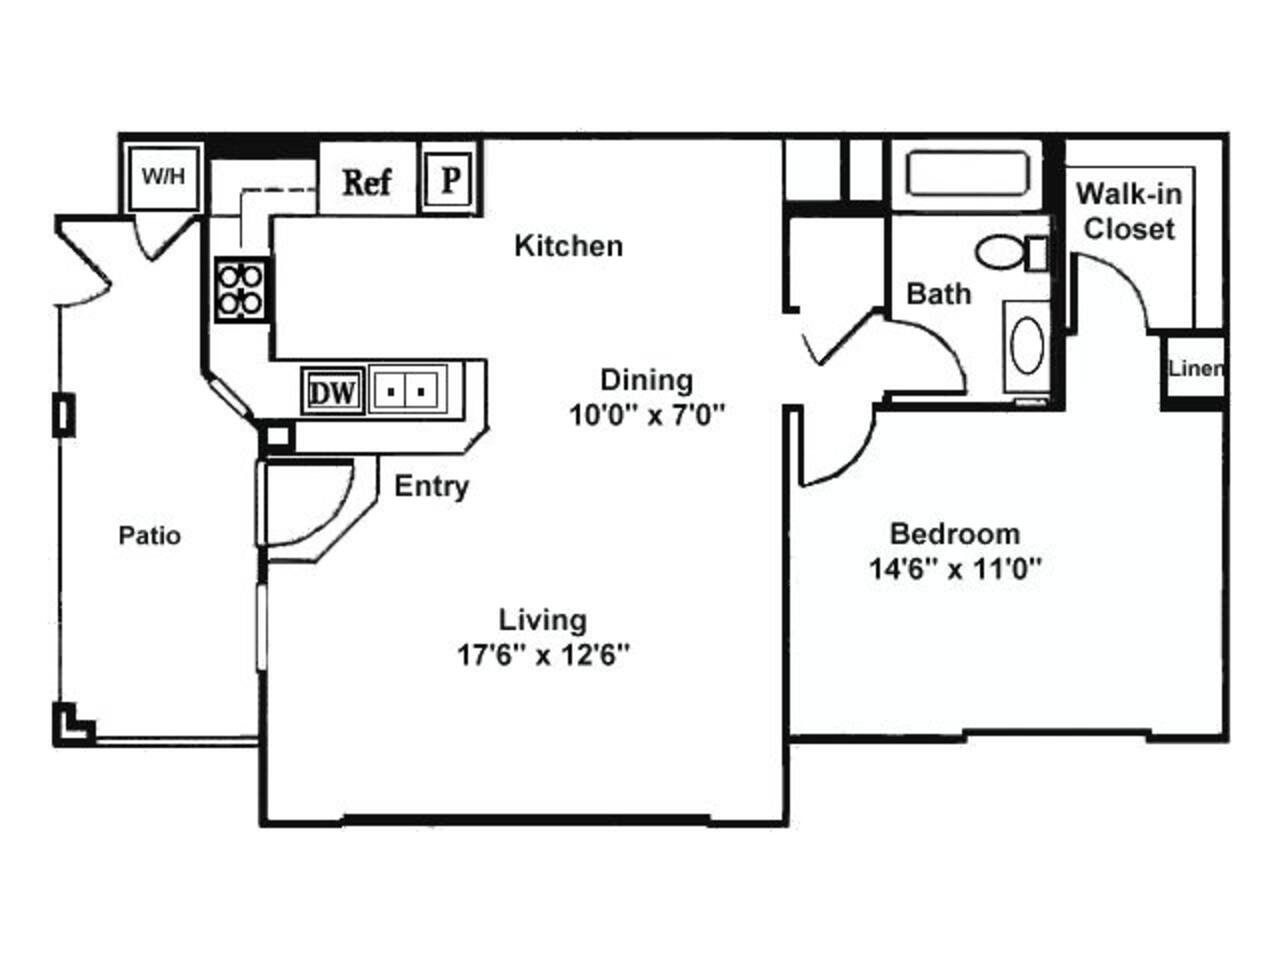 Floorplan diagram for Chestnut, showing 1 bedroom